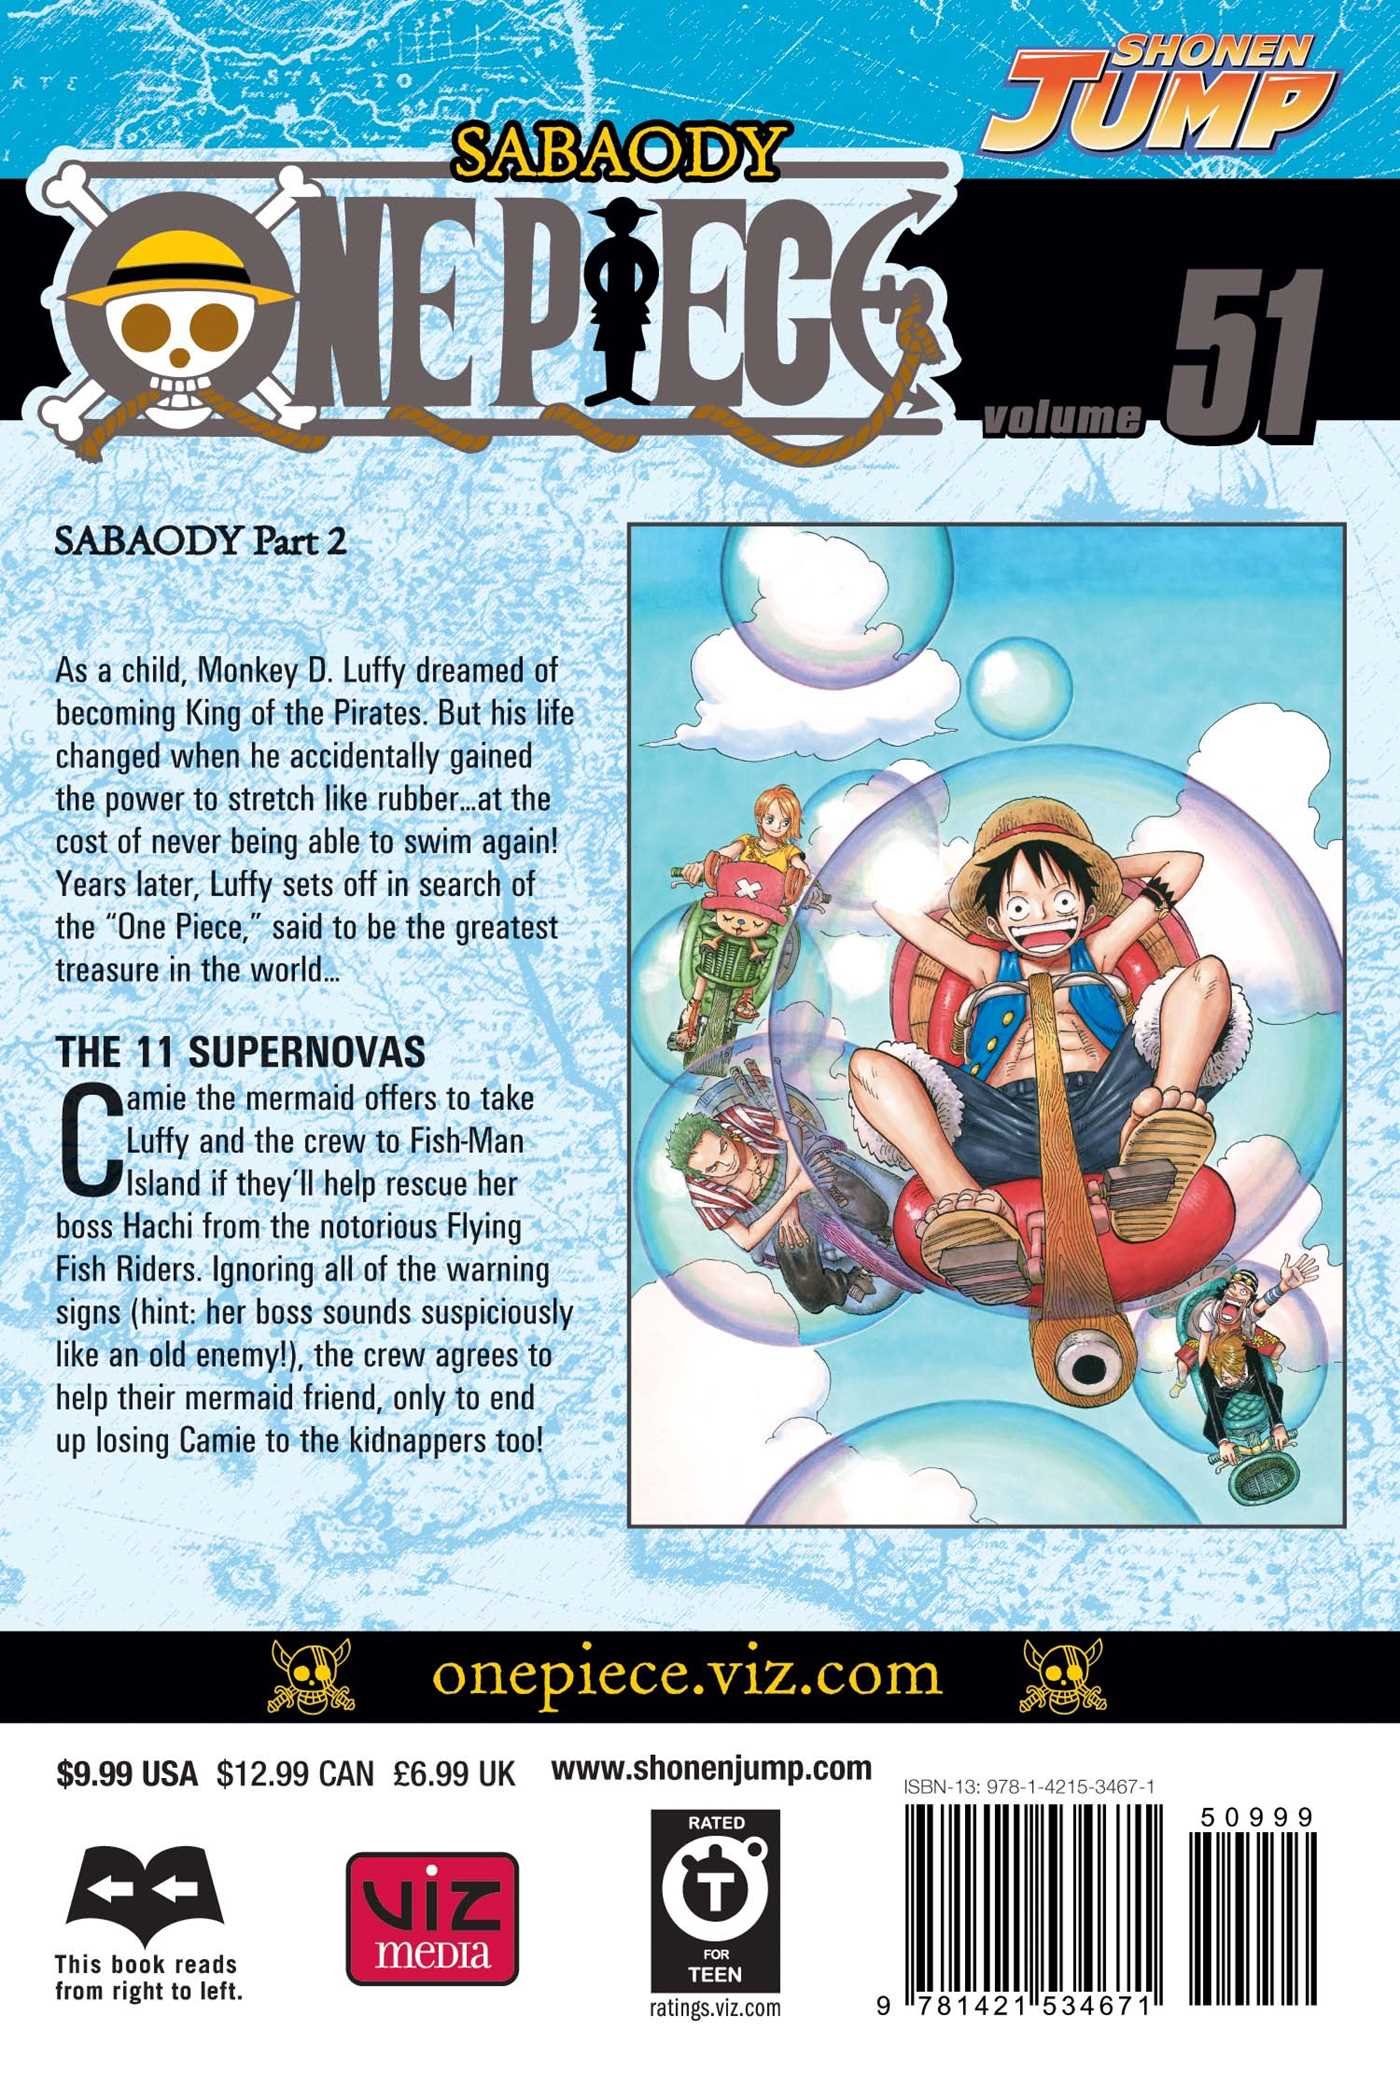 One Piece - Volume 51 | Eiichiro Oda image1